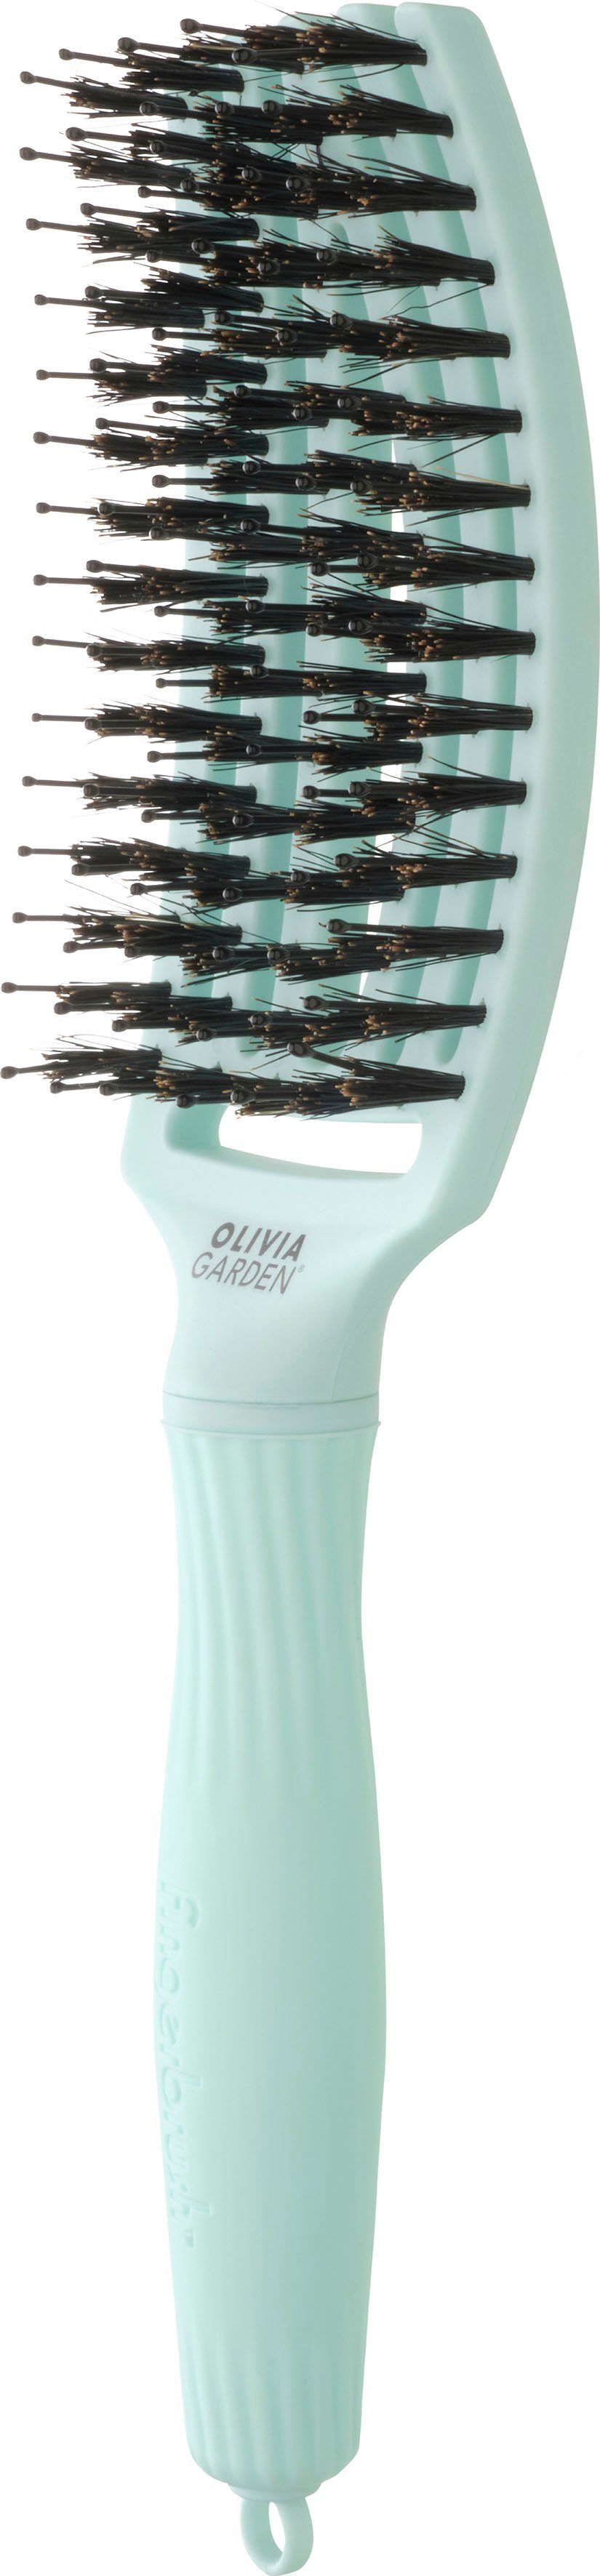 GARDEN OLIVIA Fingerbrush Haarbürste Medium Combo mint